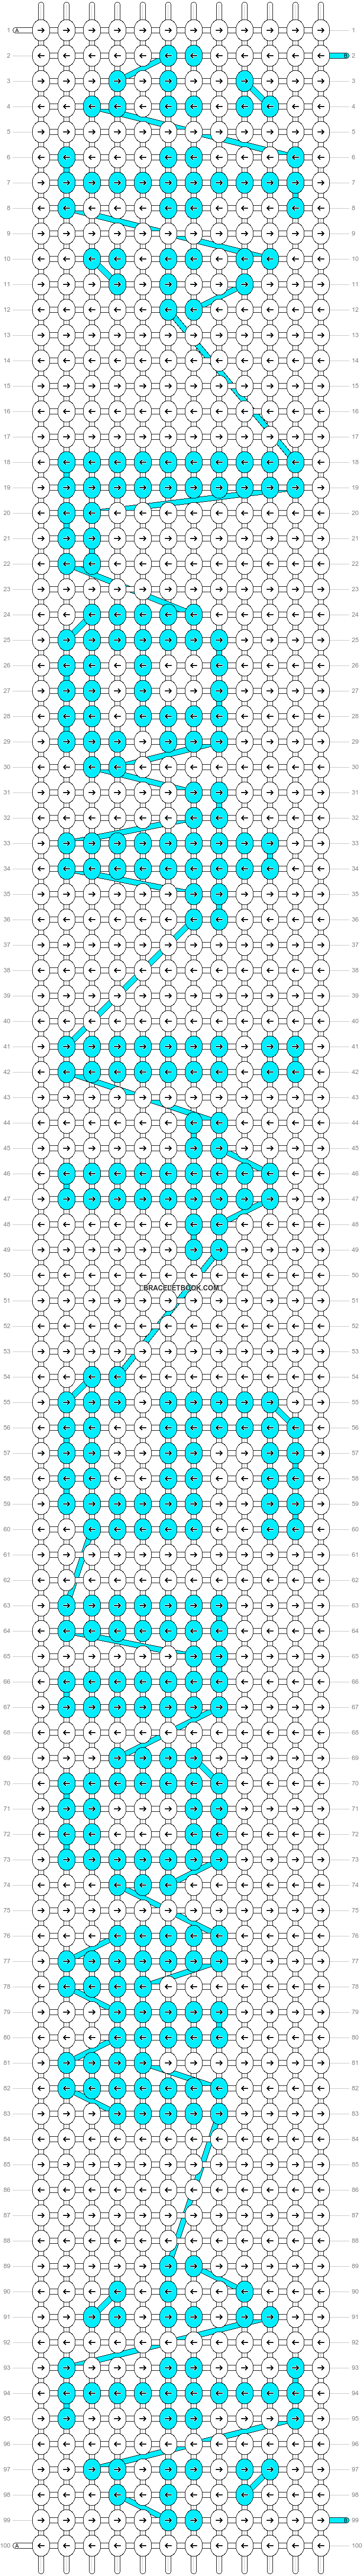 Alpha pattern #27311 variation #10992 pattern